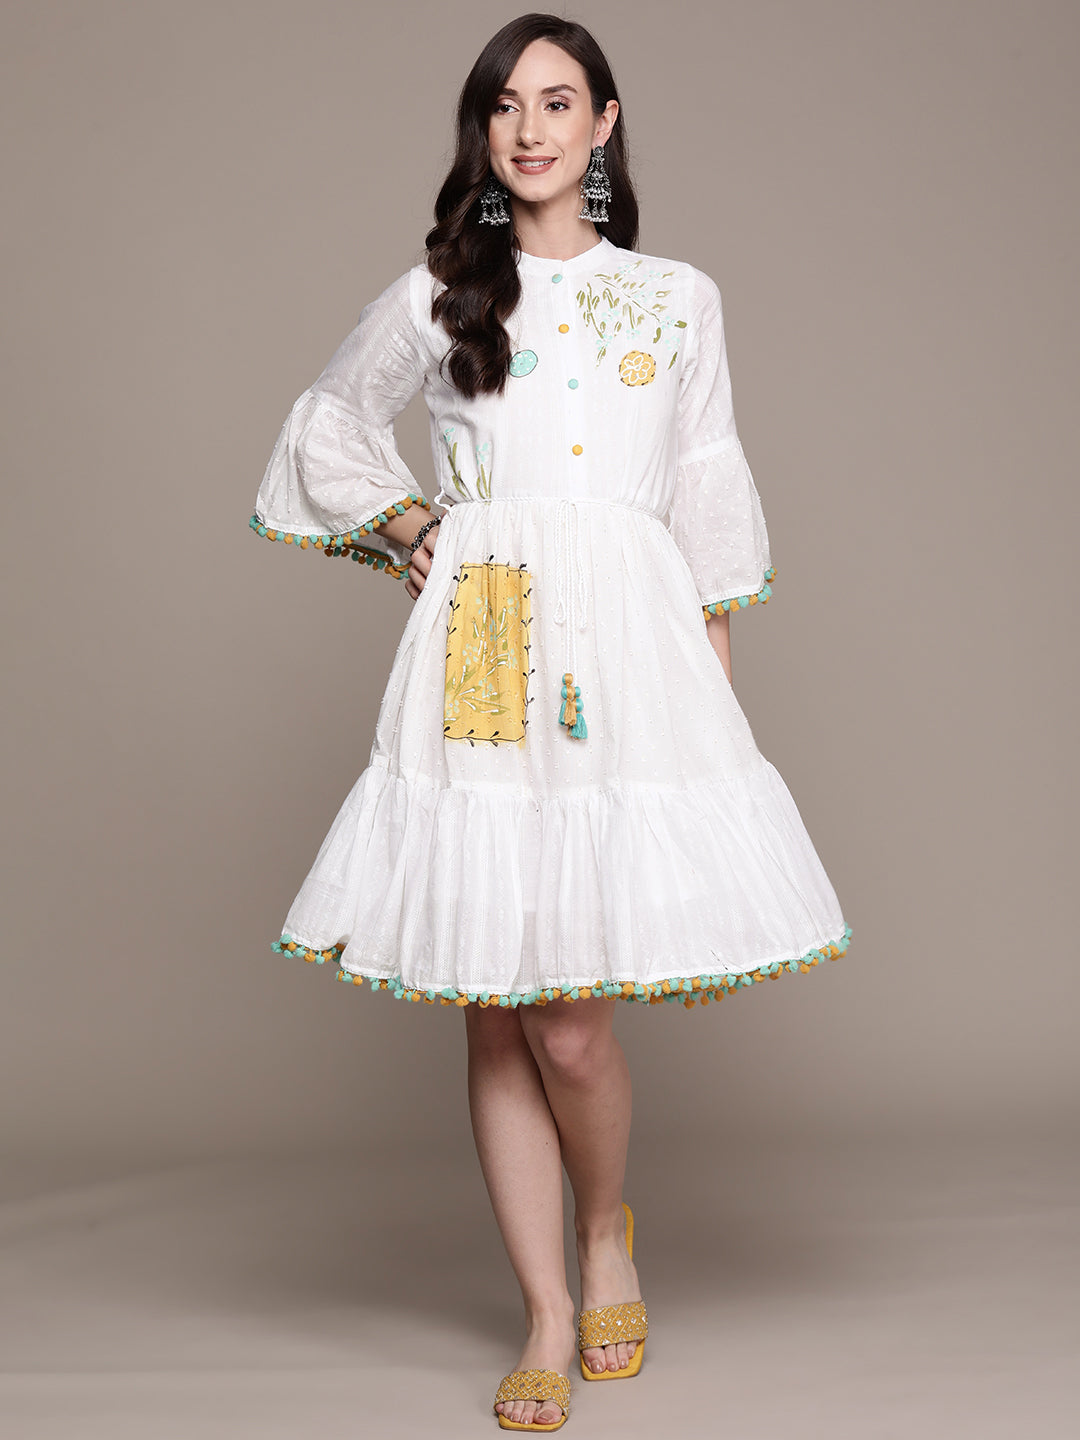 Ishin Women's White Lurex A-Line Dress